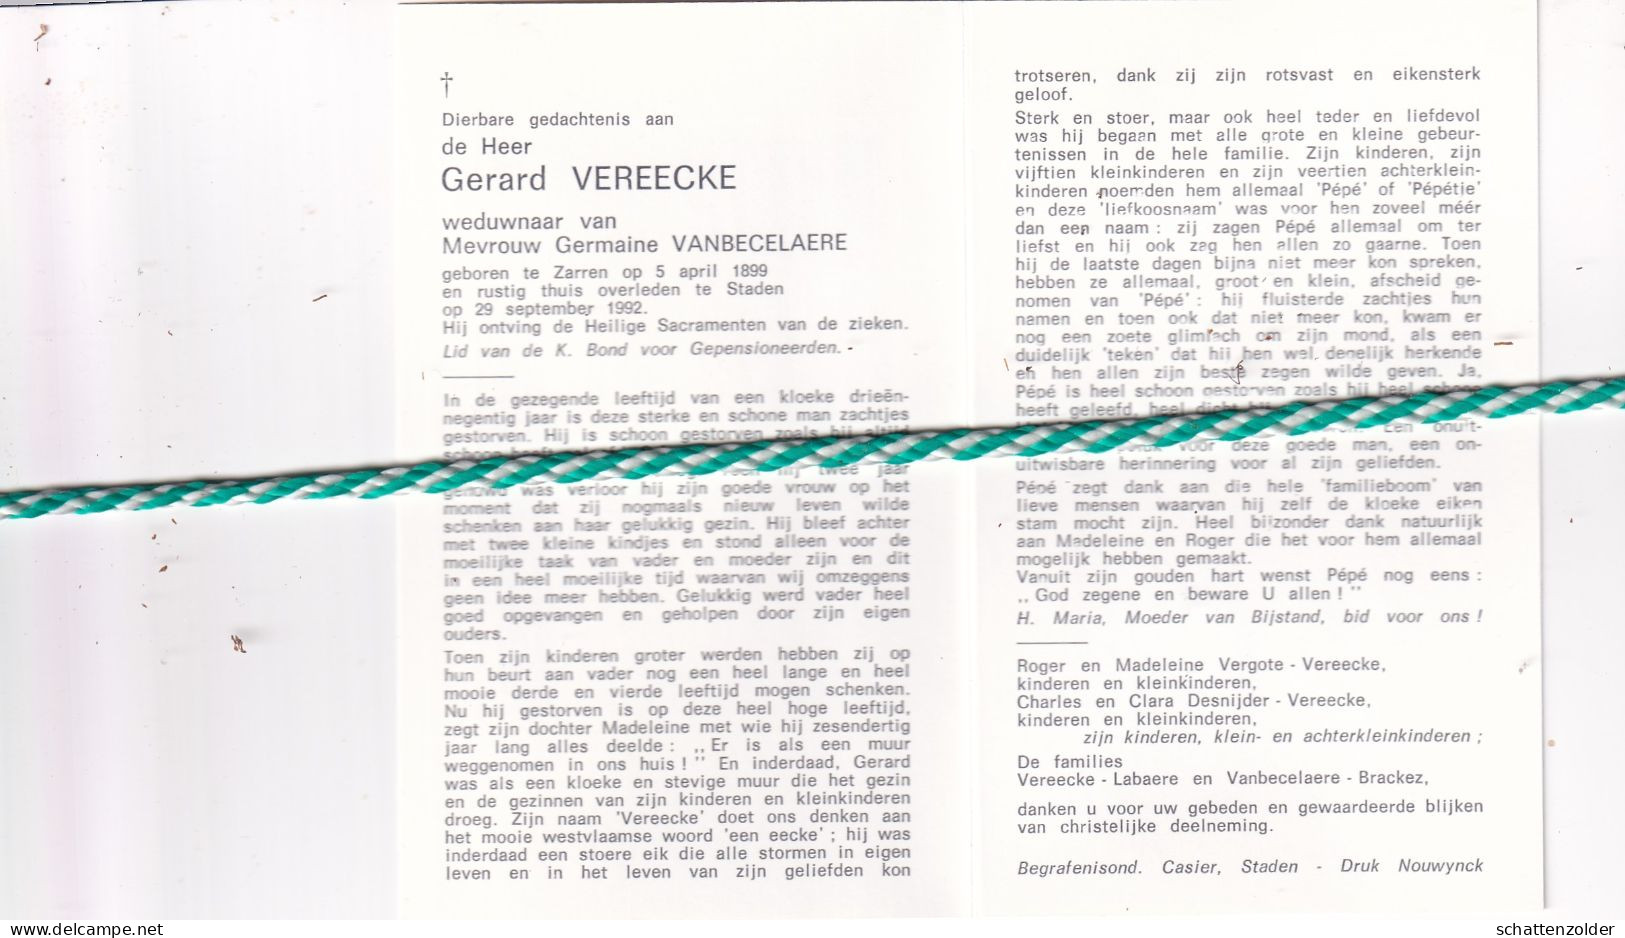 Gerard Vereecke-Vanbecelaere, Zarren 1899, Staden 1992. Foto - Obituary Notices